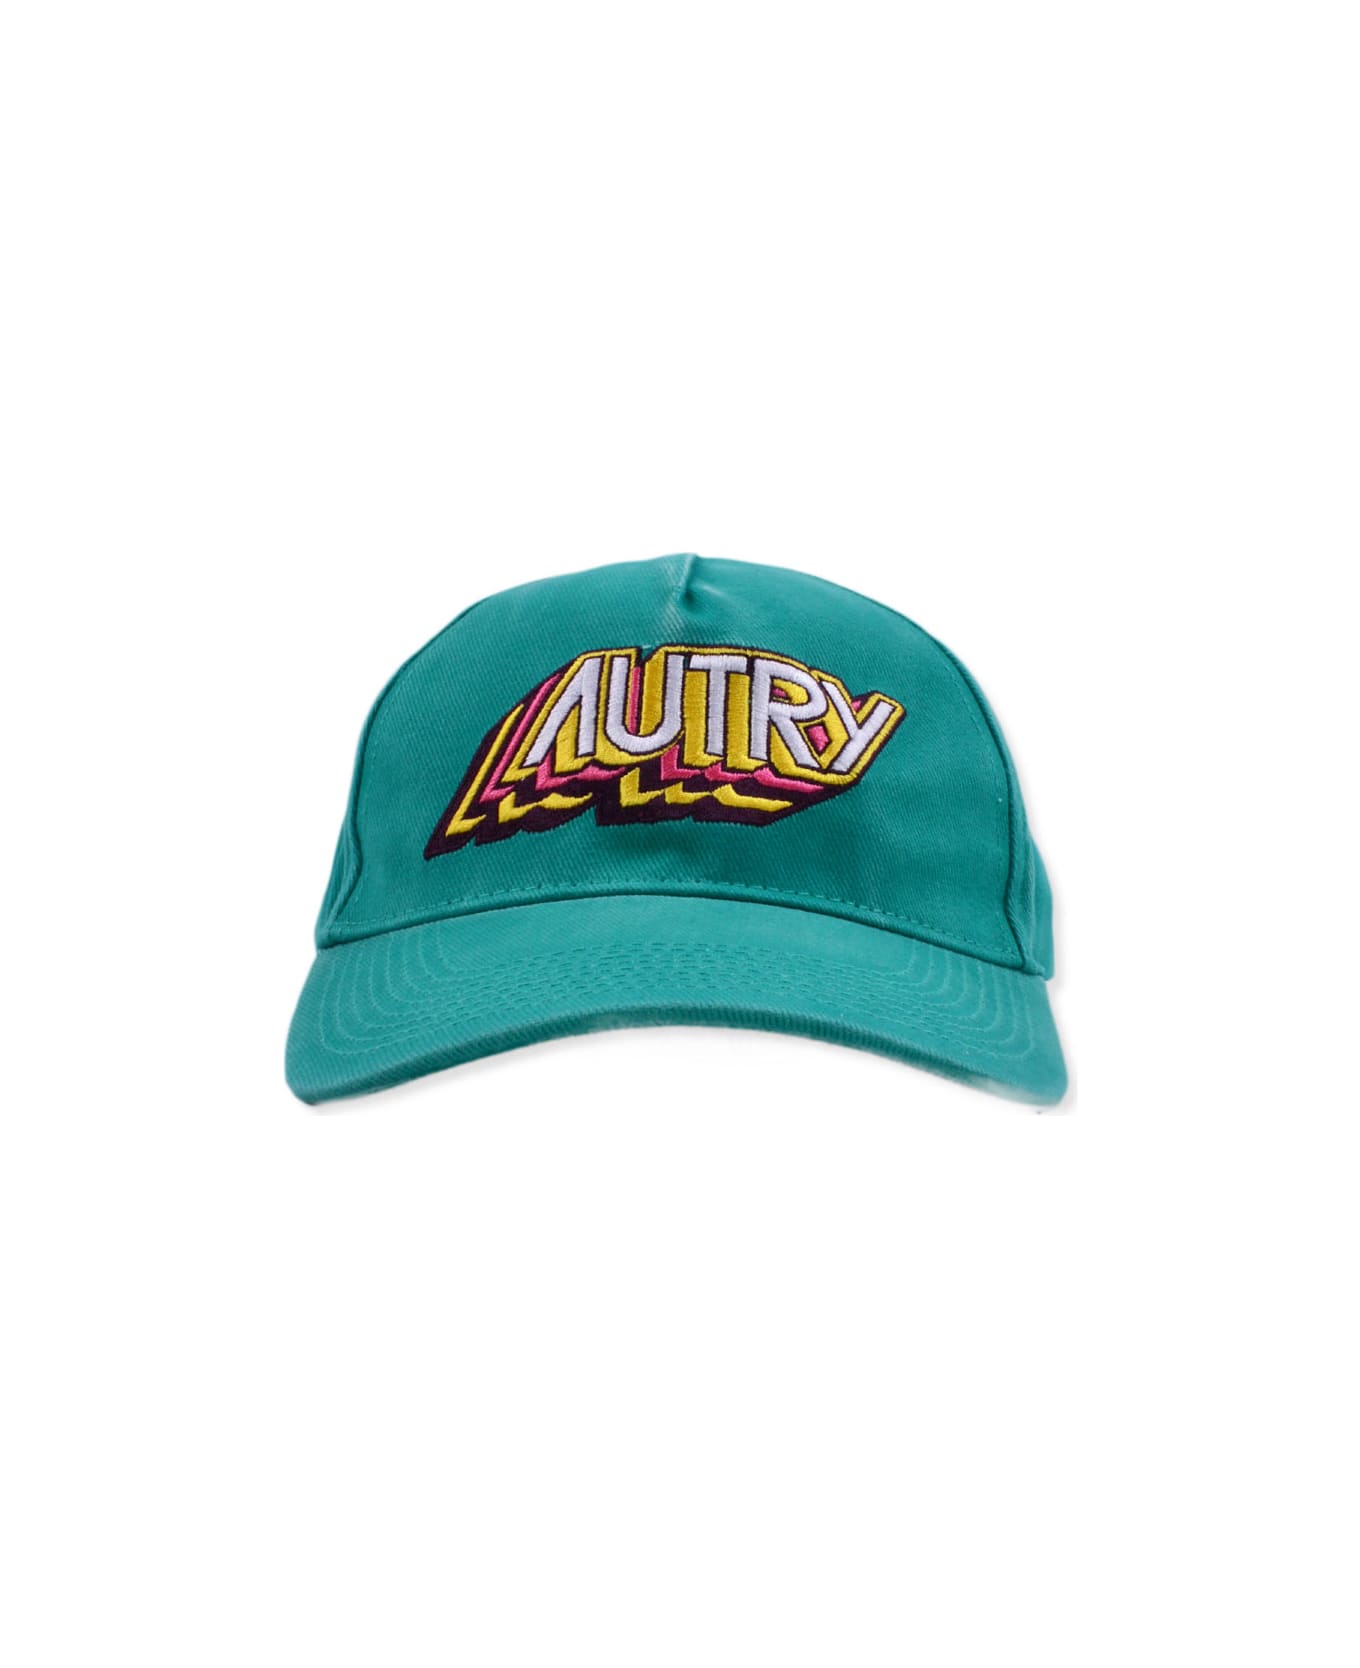 Autry Hat - Green